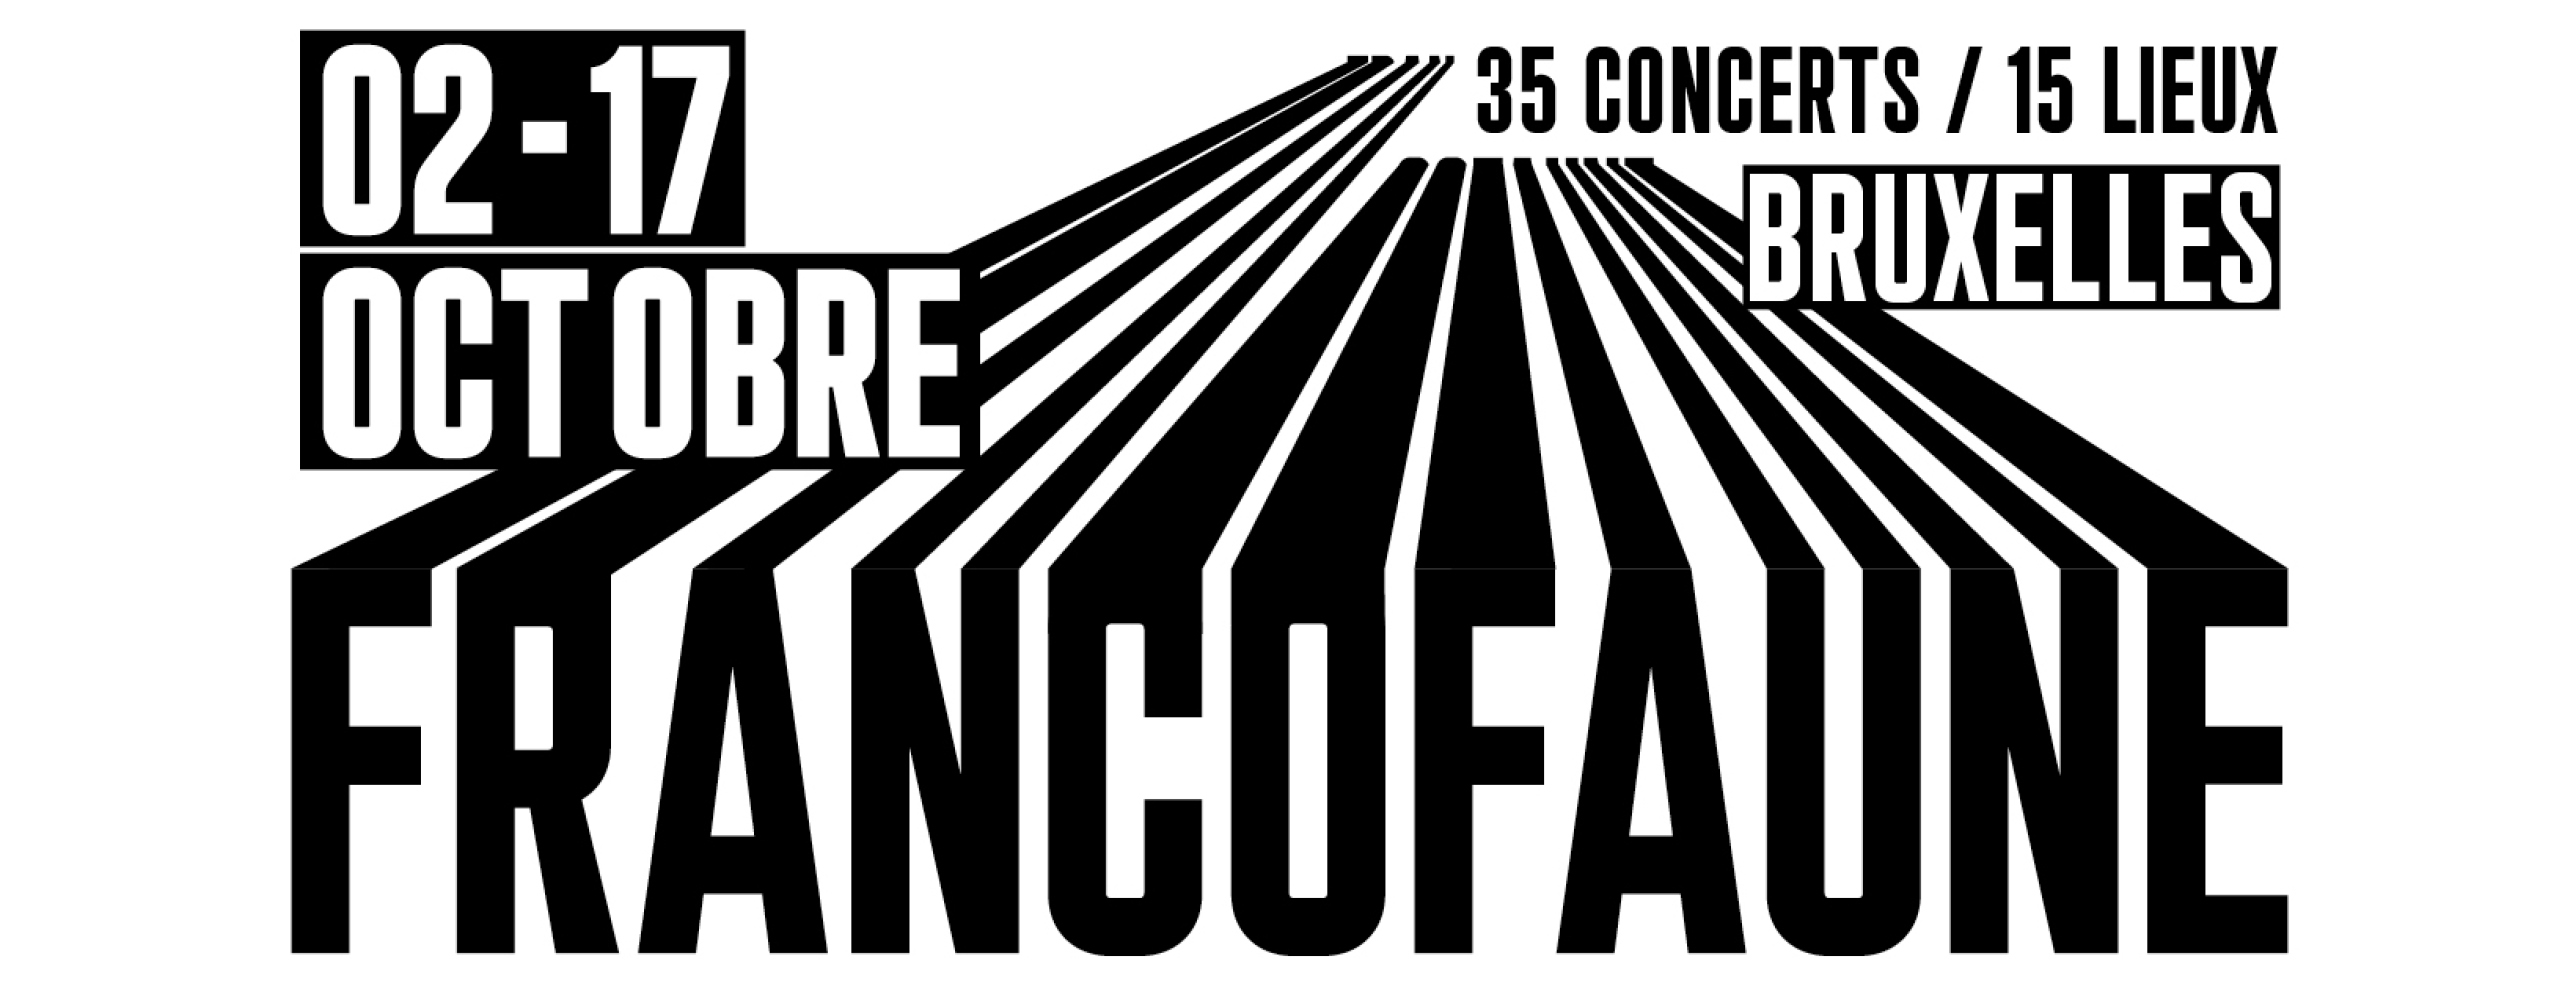 Festival Francofaune 2020